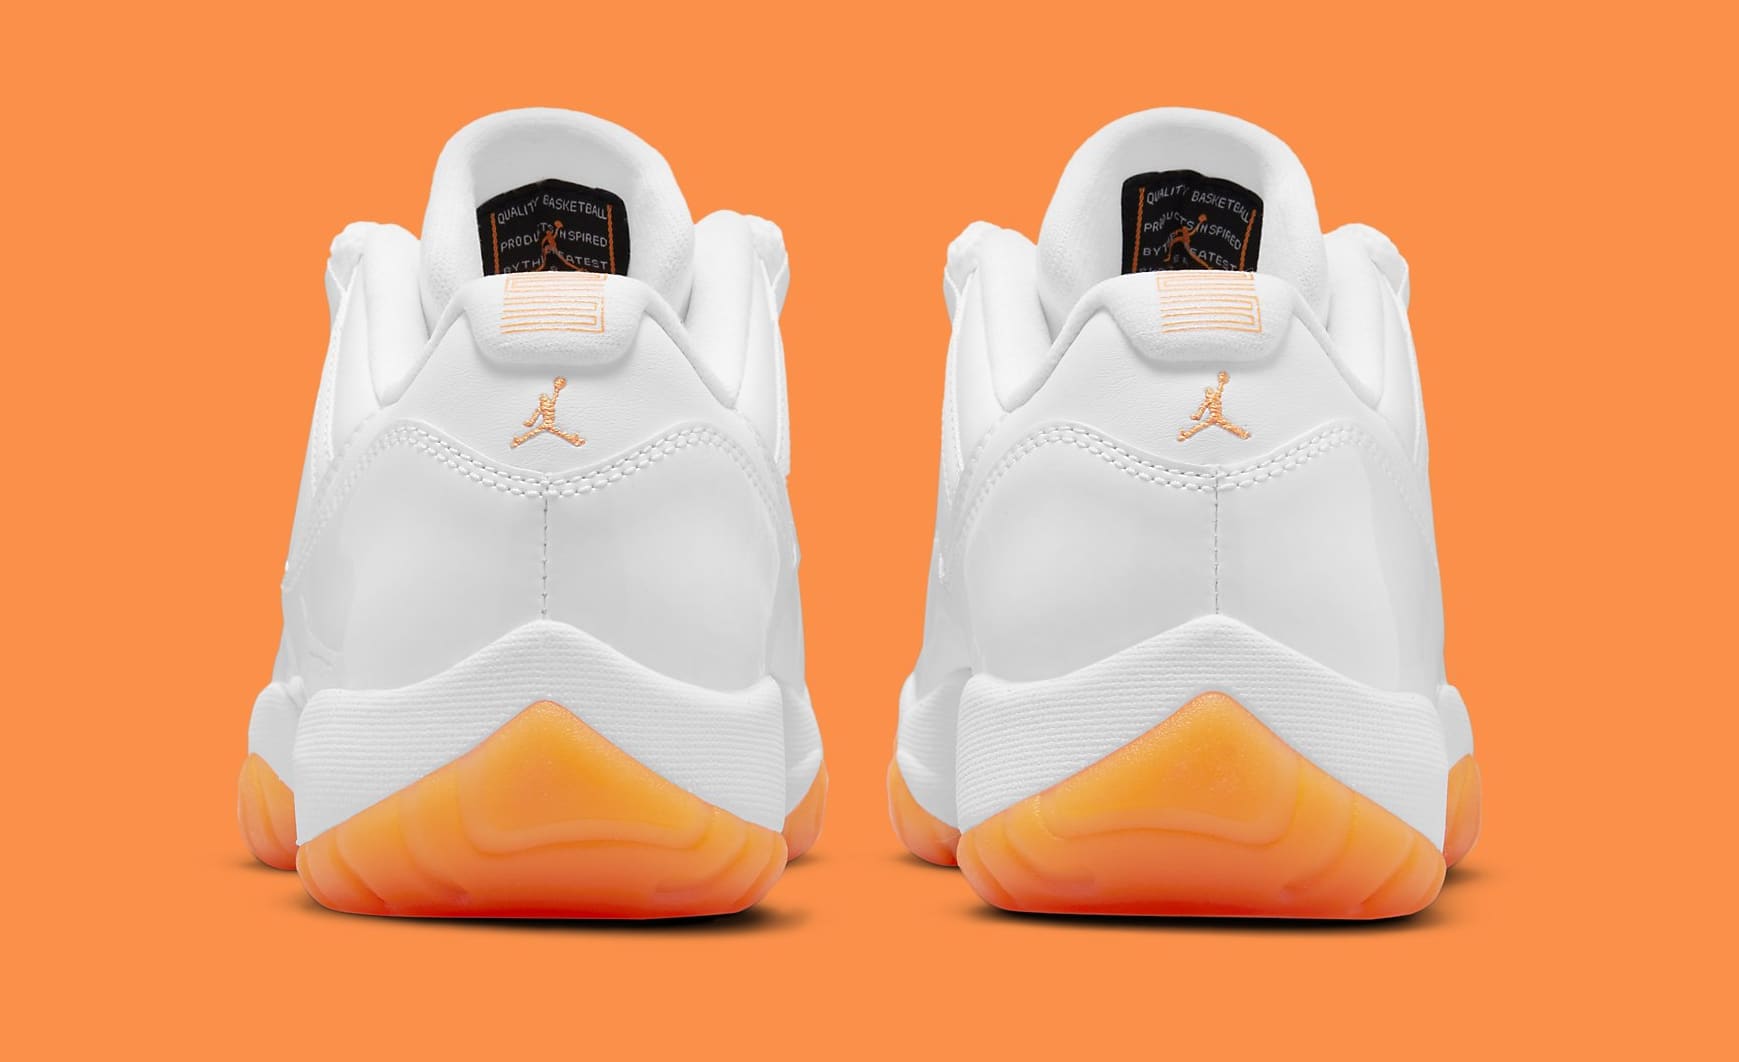 white and orange jordans 11 release date